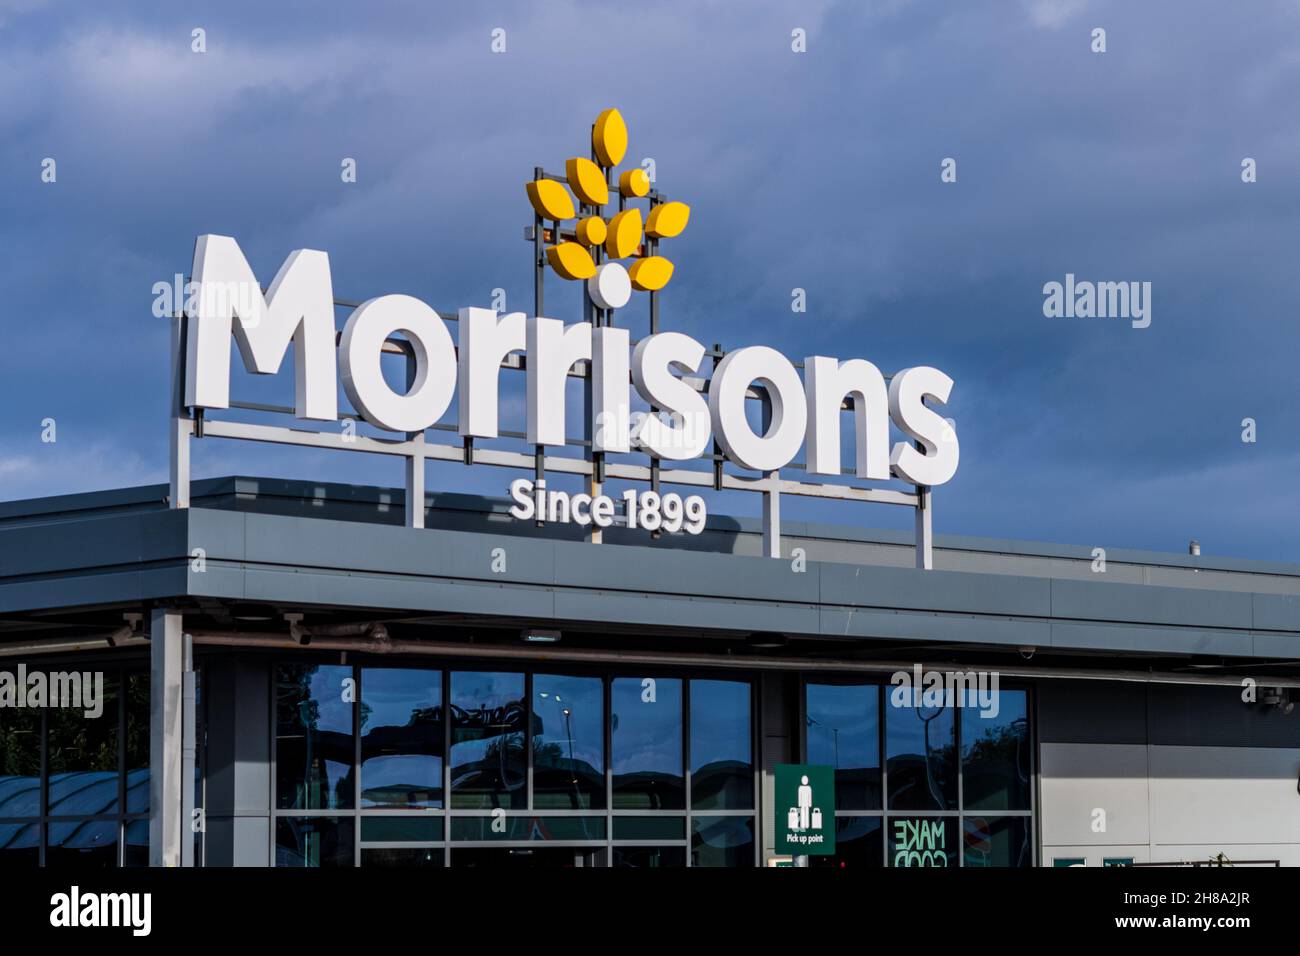 Morrisons Supermarket Sign - Morrisons since 1899. Stock Photo